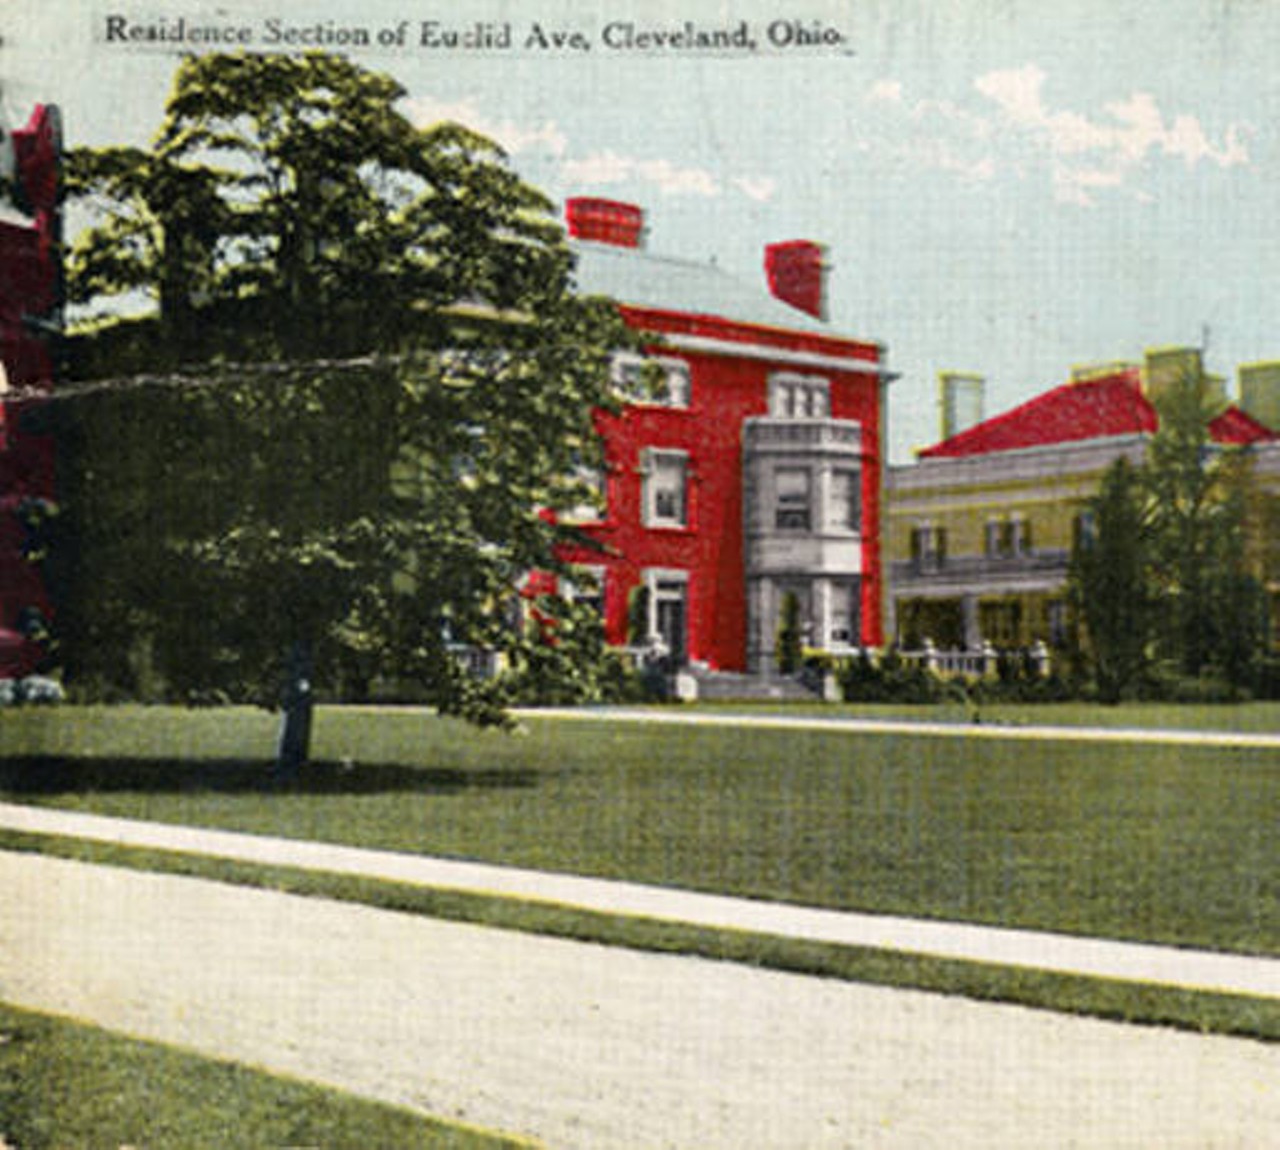 Mansions along Euclid Avenue (Millionaires' Row). 1912